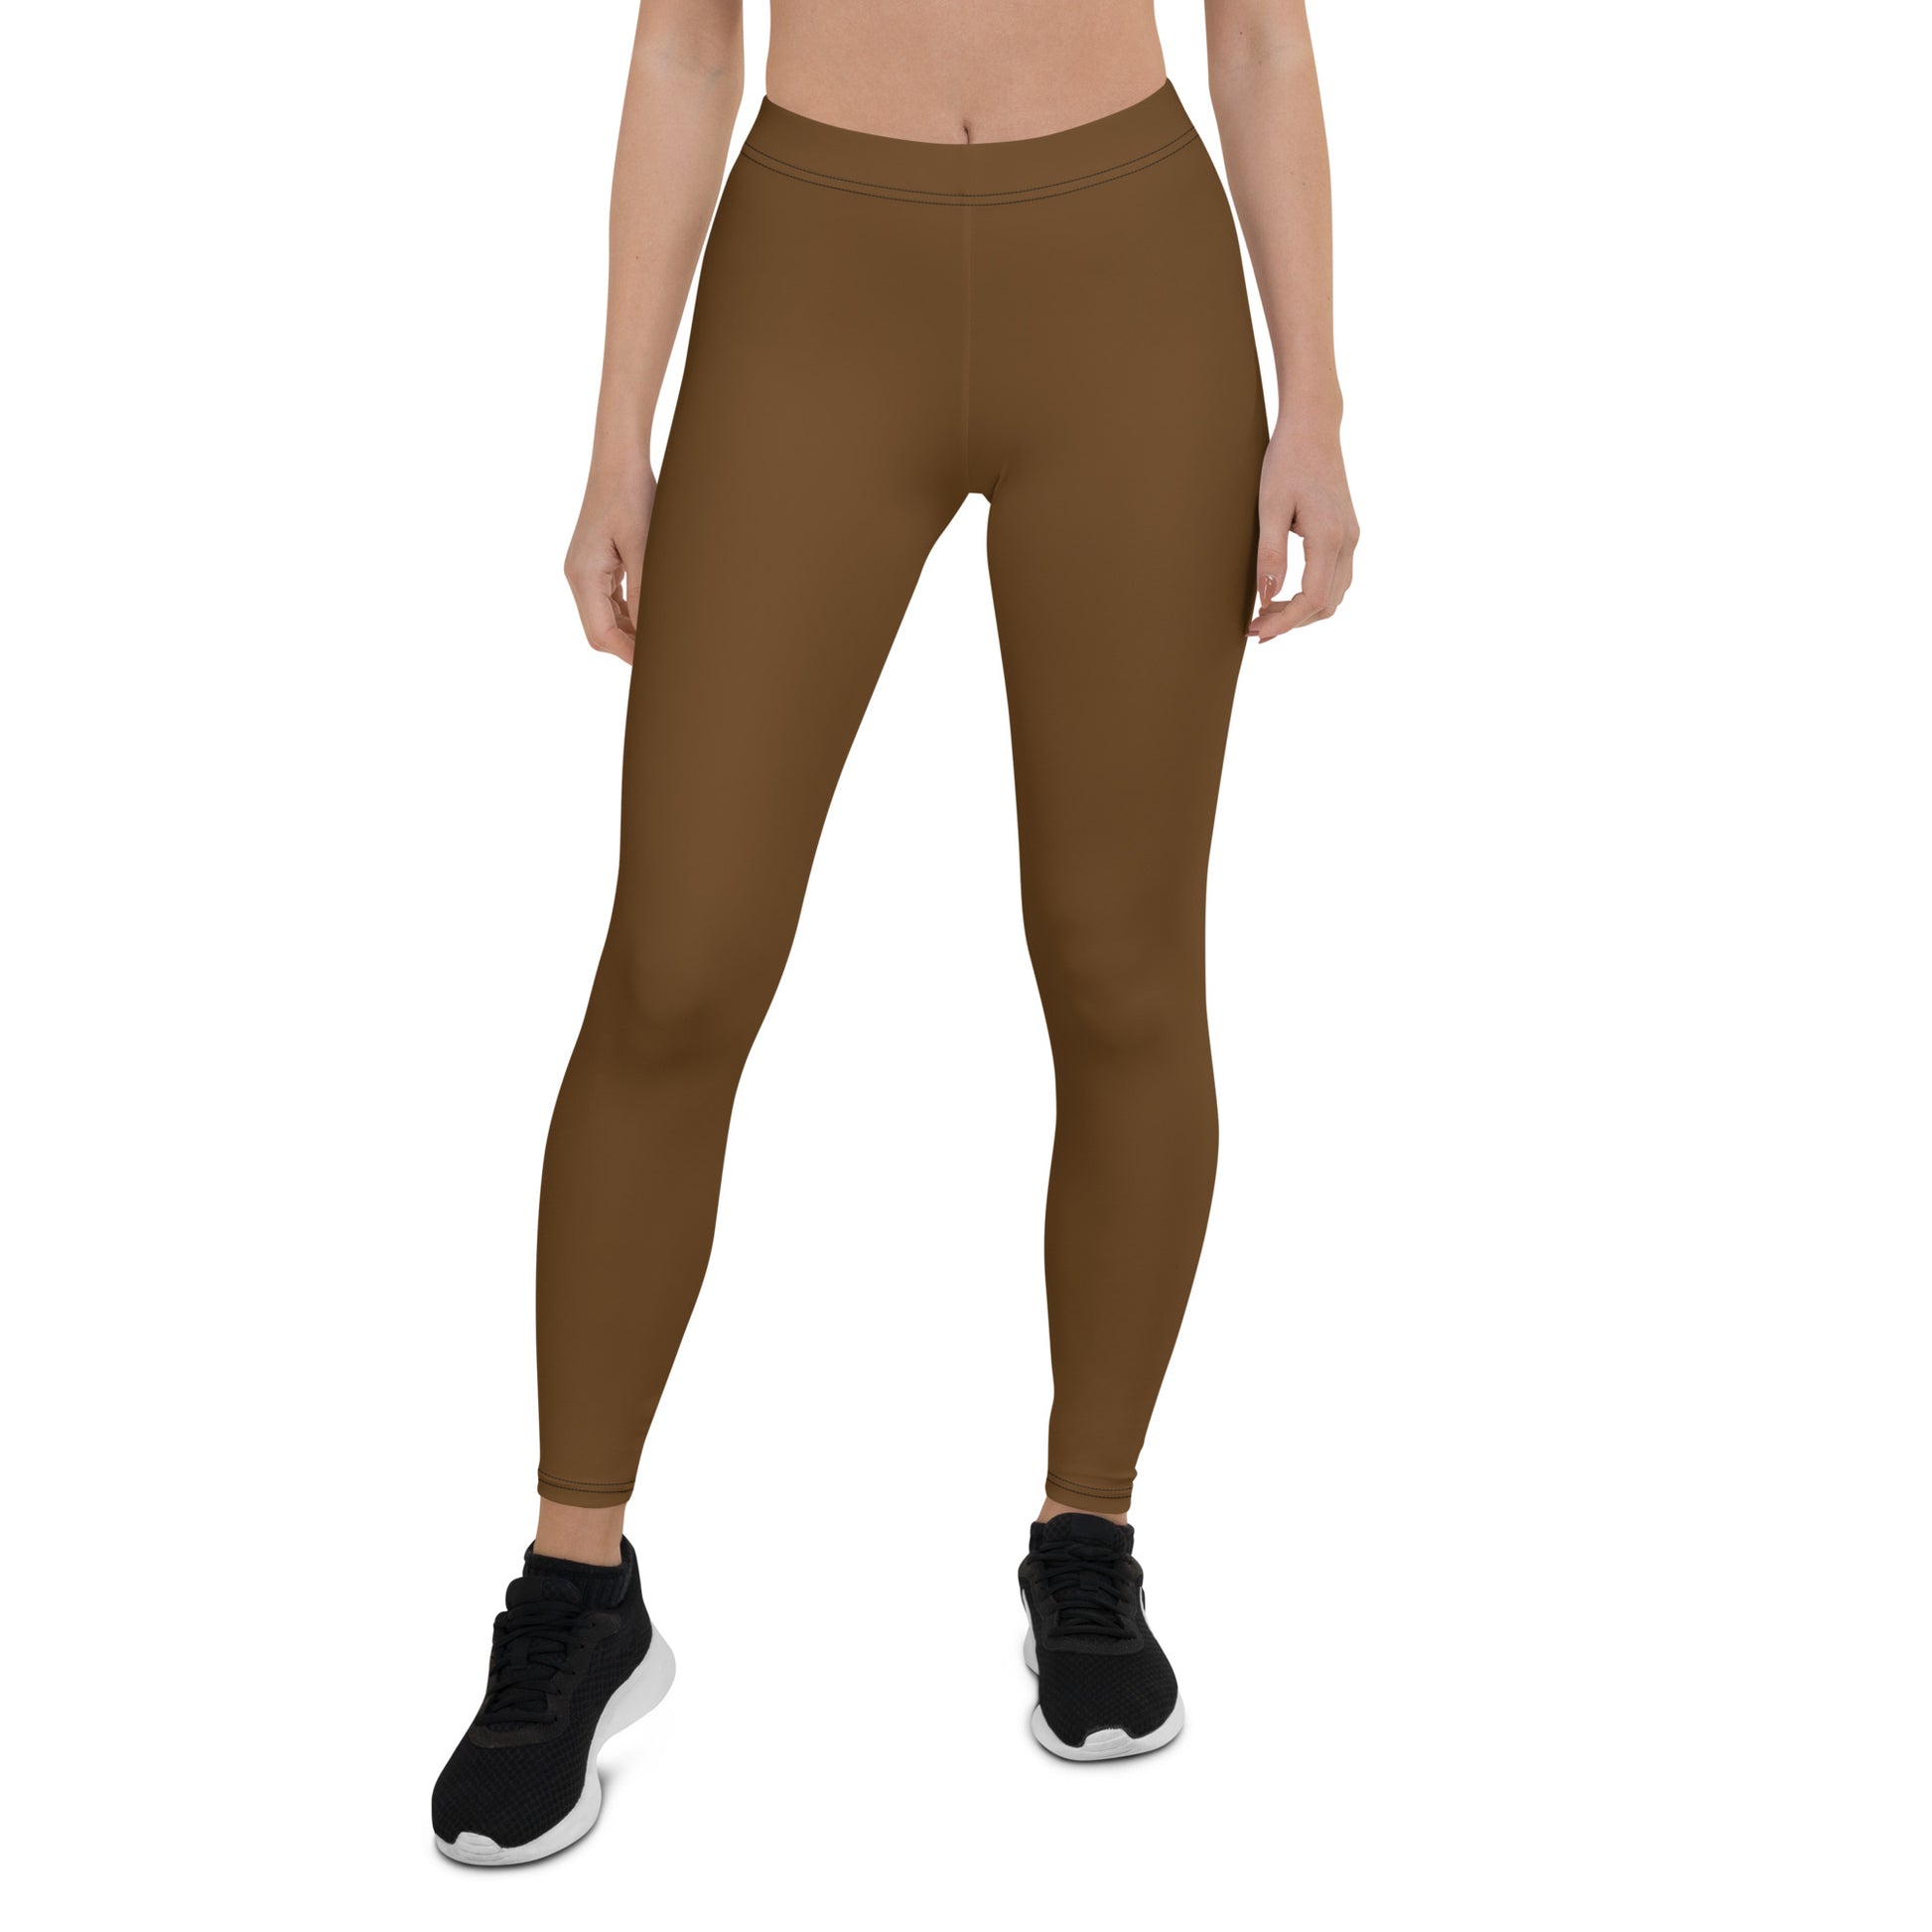 Humble Sportswear, women’s color match leggings, women’s leggings, women’s brown leggings, spandex leggings